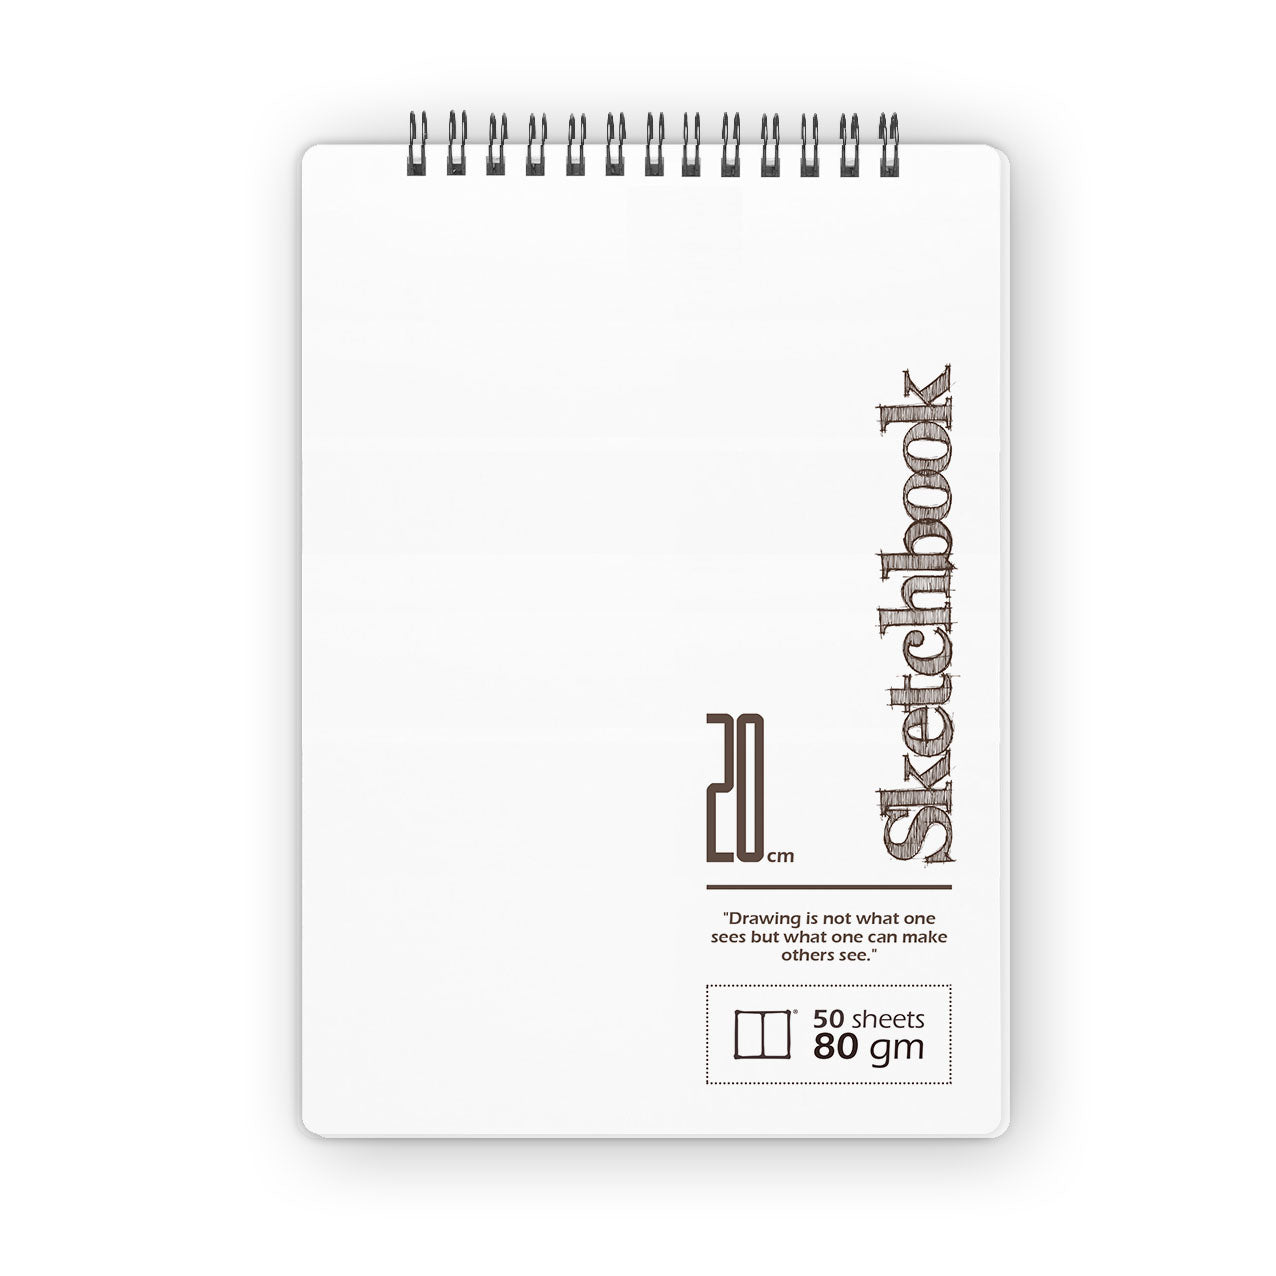 Sketchbook | 20 X 14 cm - (Plain) - White Paper - from SketchBook Stationery